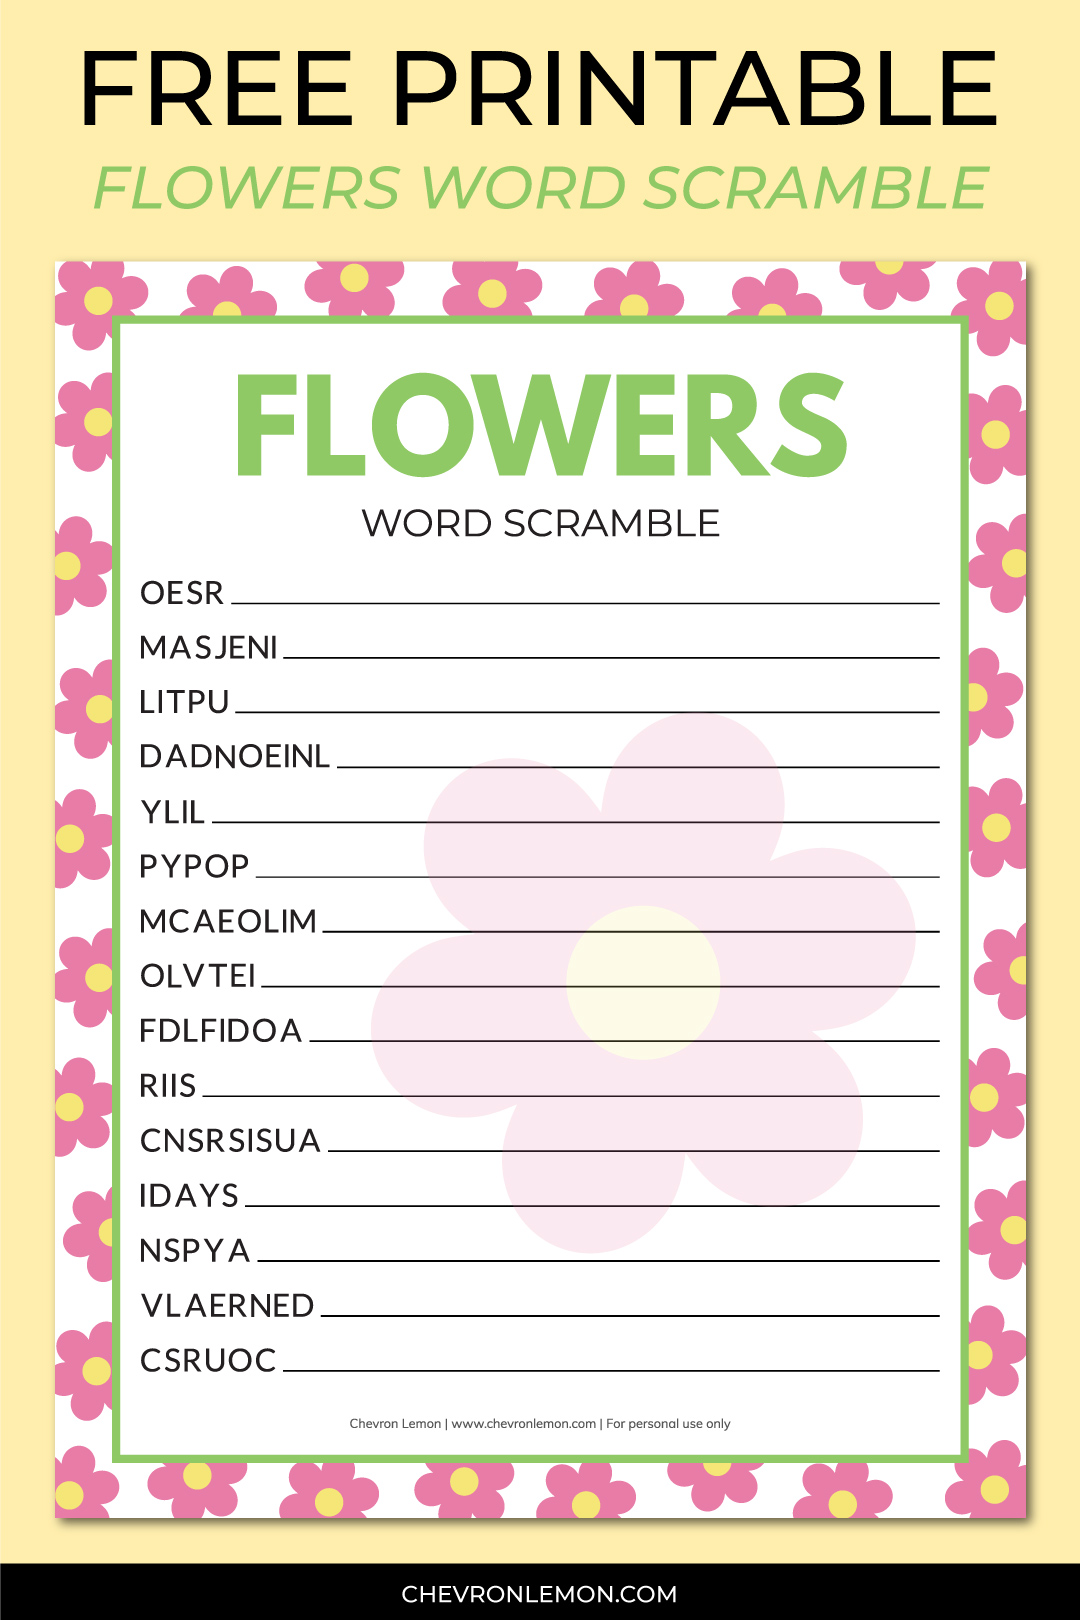 Printable flower word scramble